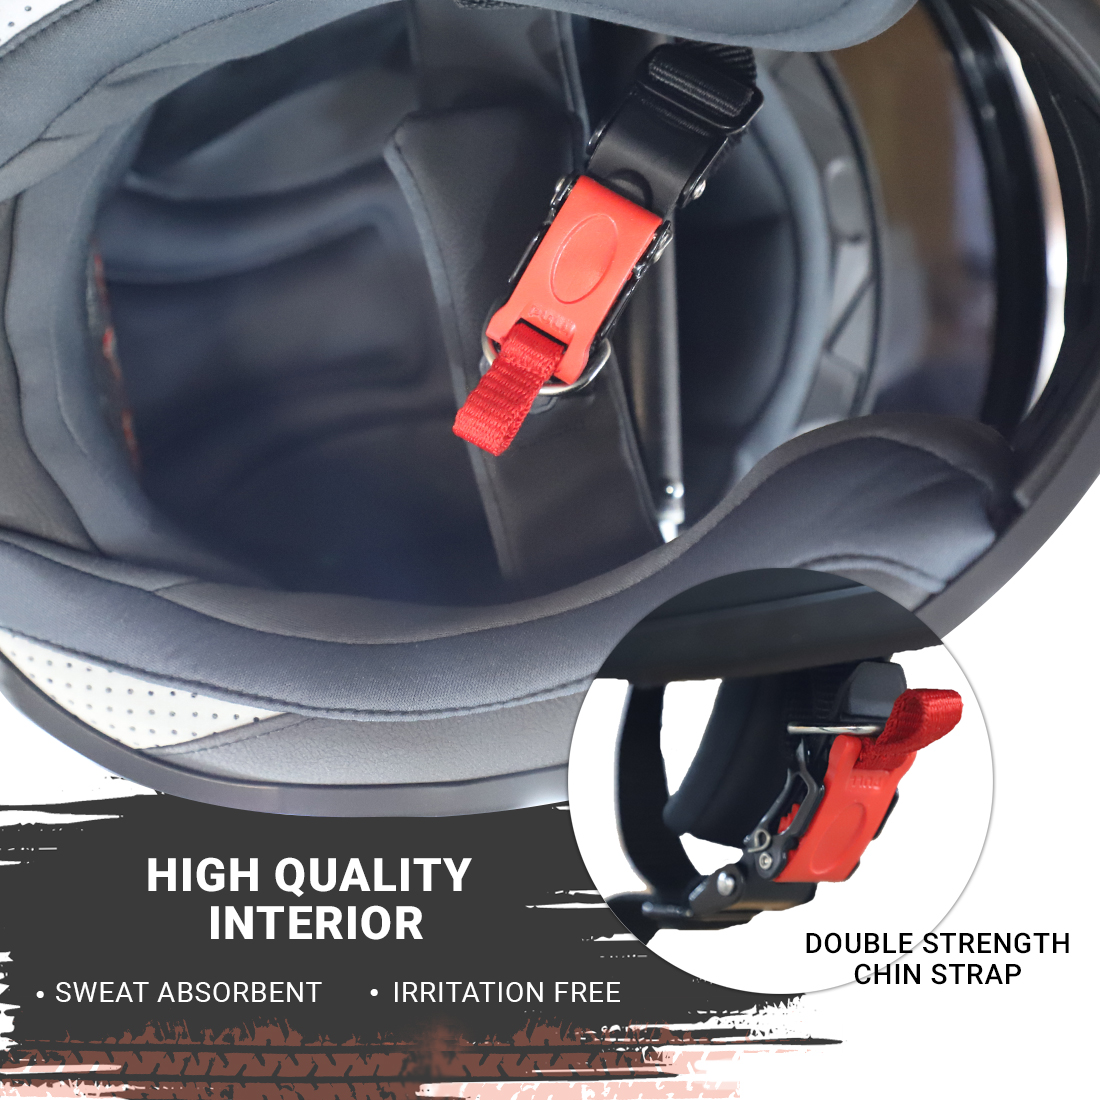 Steelbird SBH-17 Terminator ISI Certified Full Face Graphic Helmet (Matt Black Fluo Red With Chrome Silver Visor)